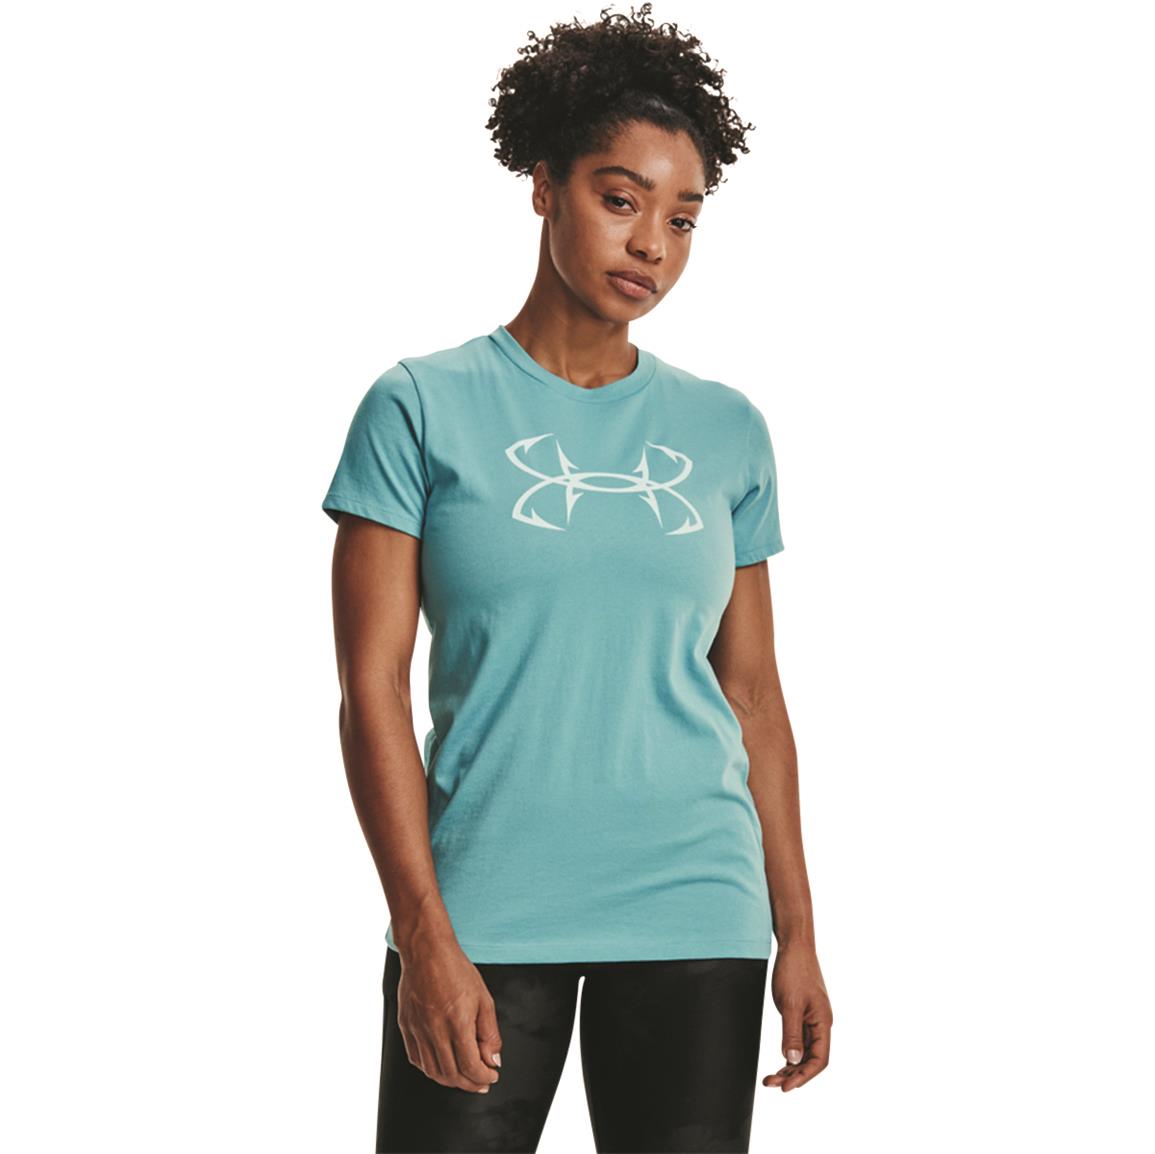 Under Armour Women's Fish Hook Logo Shirt, Cosmos